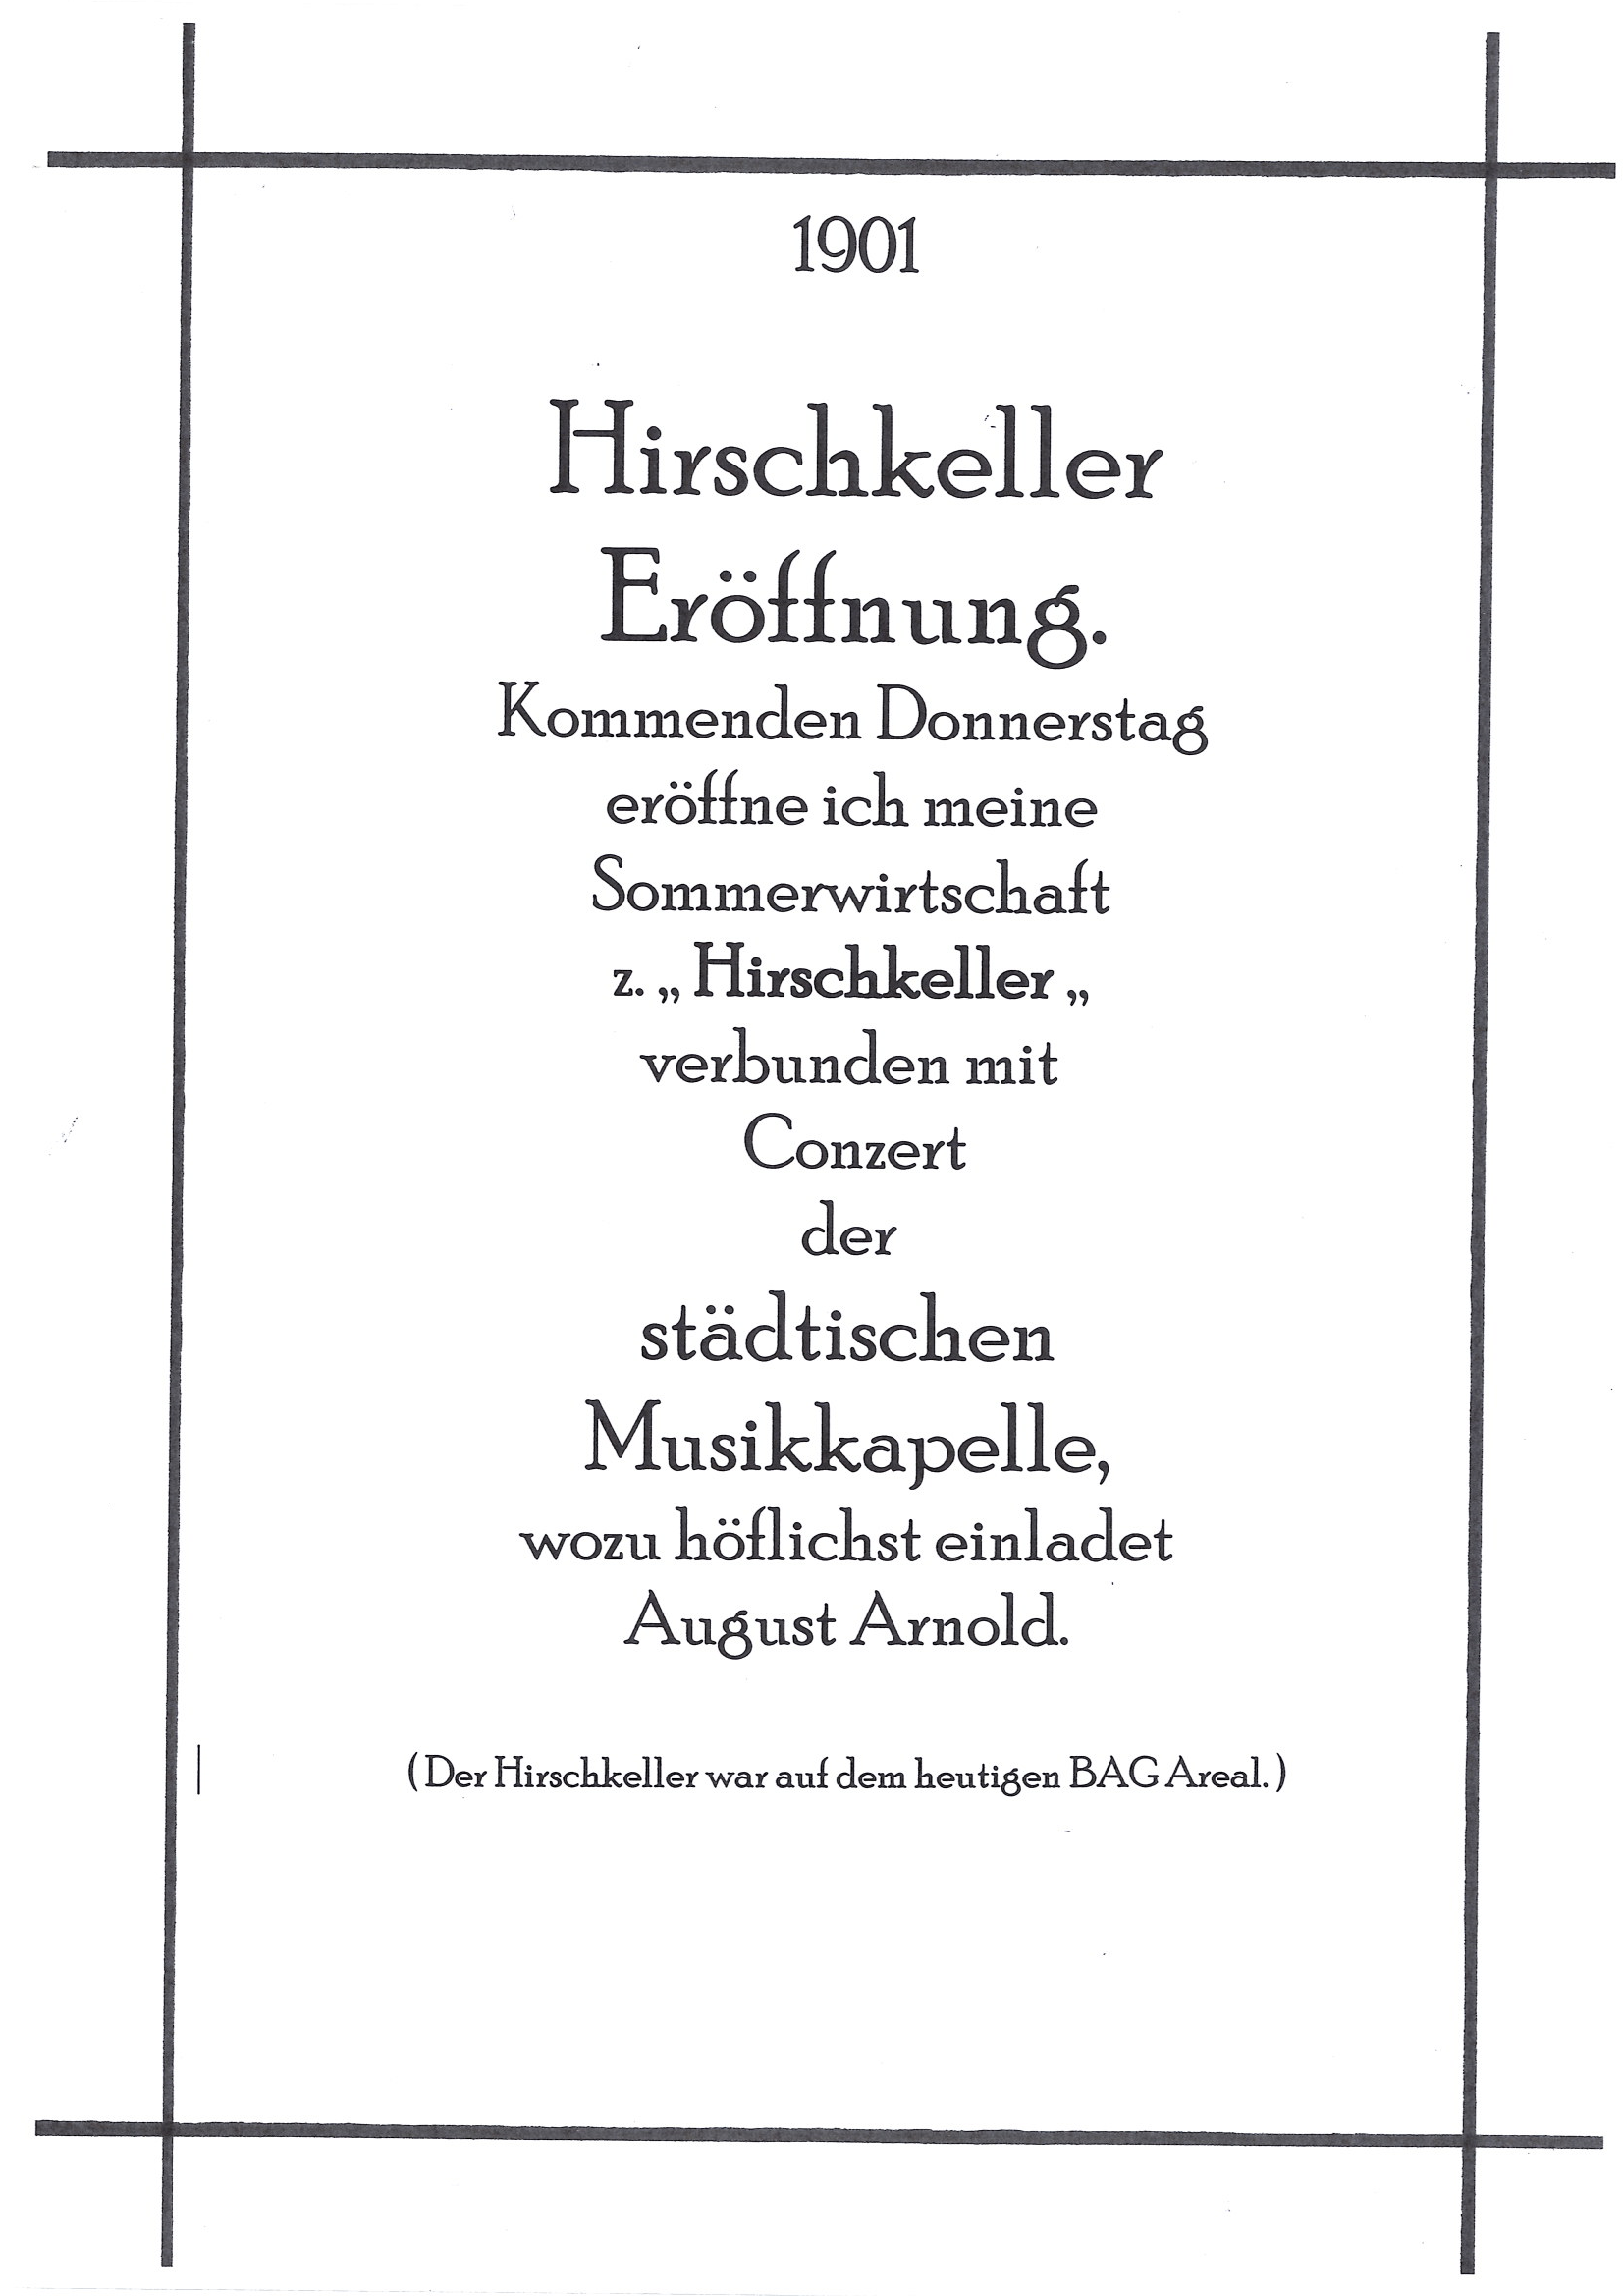 Hirschkeller Eröffnung 1901